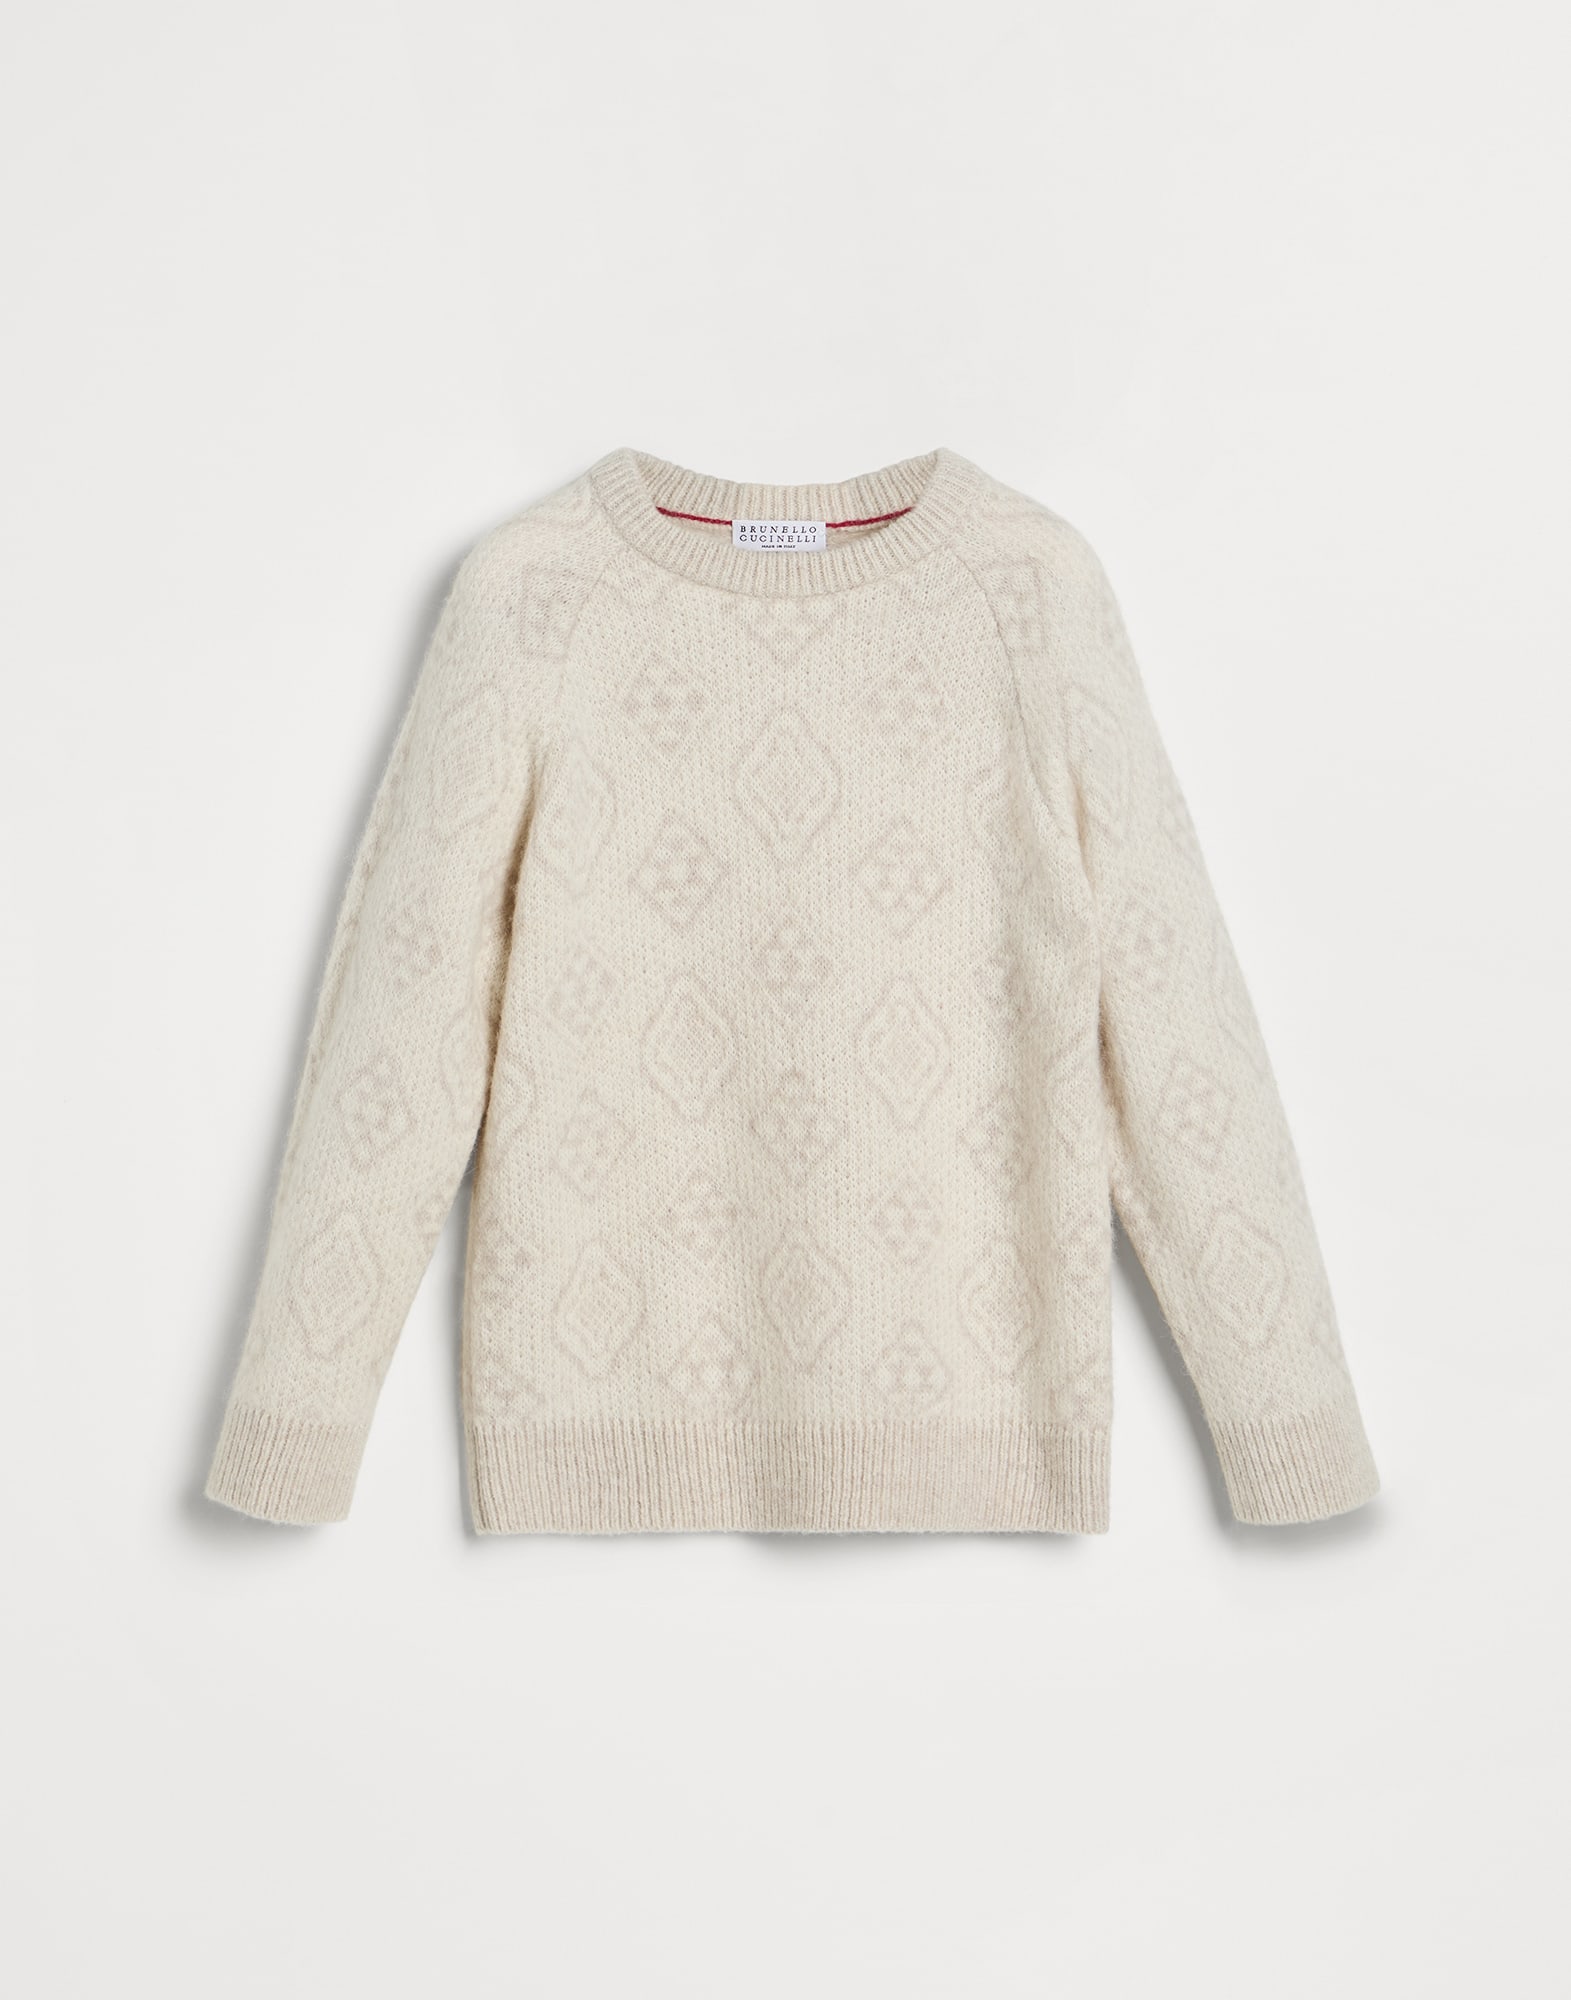 Geometric Jacquard sweater